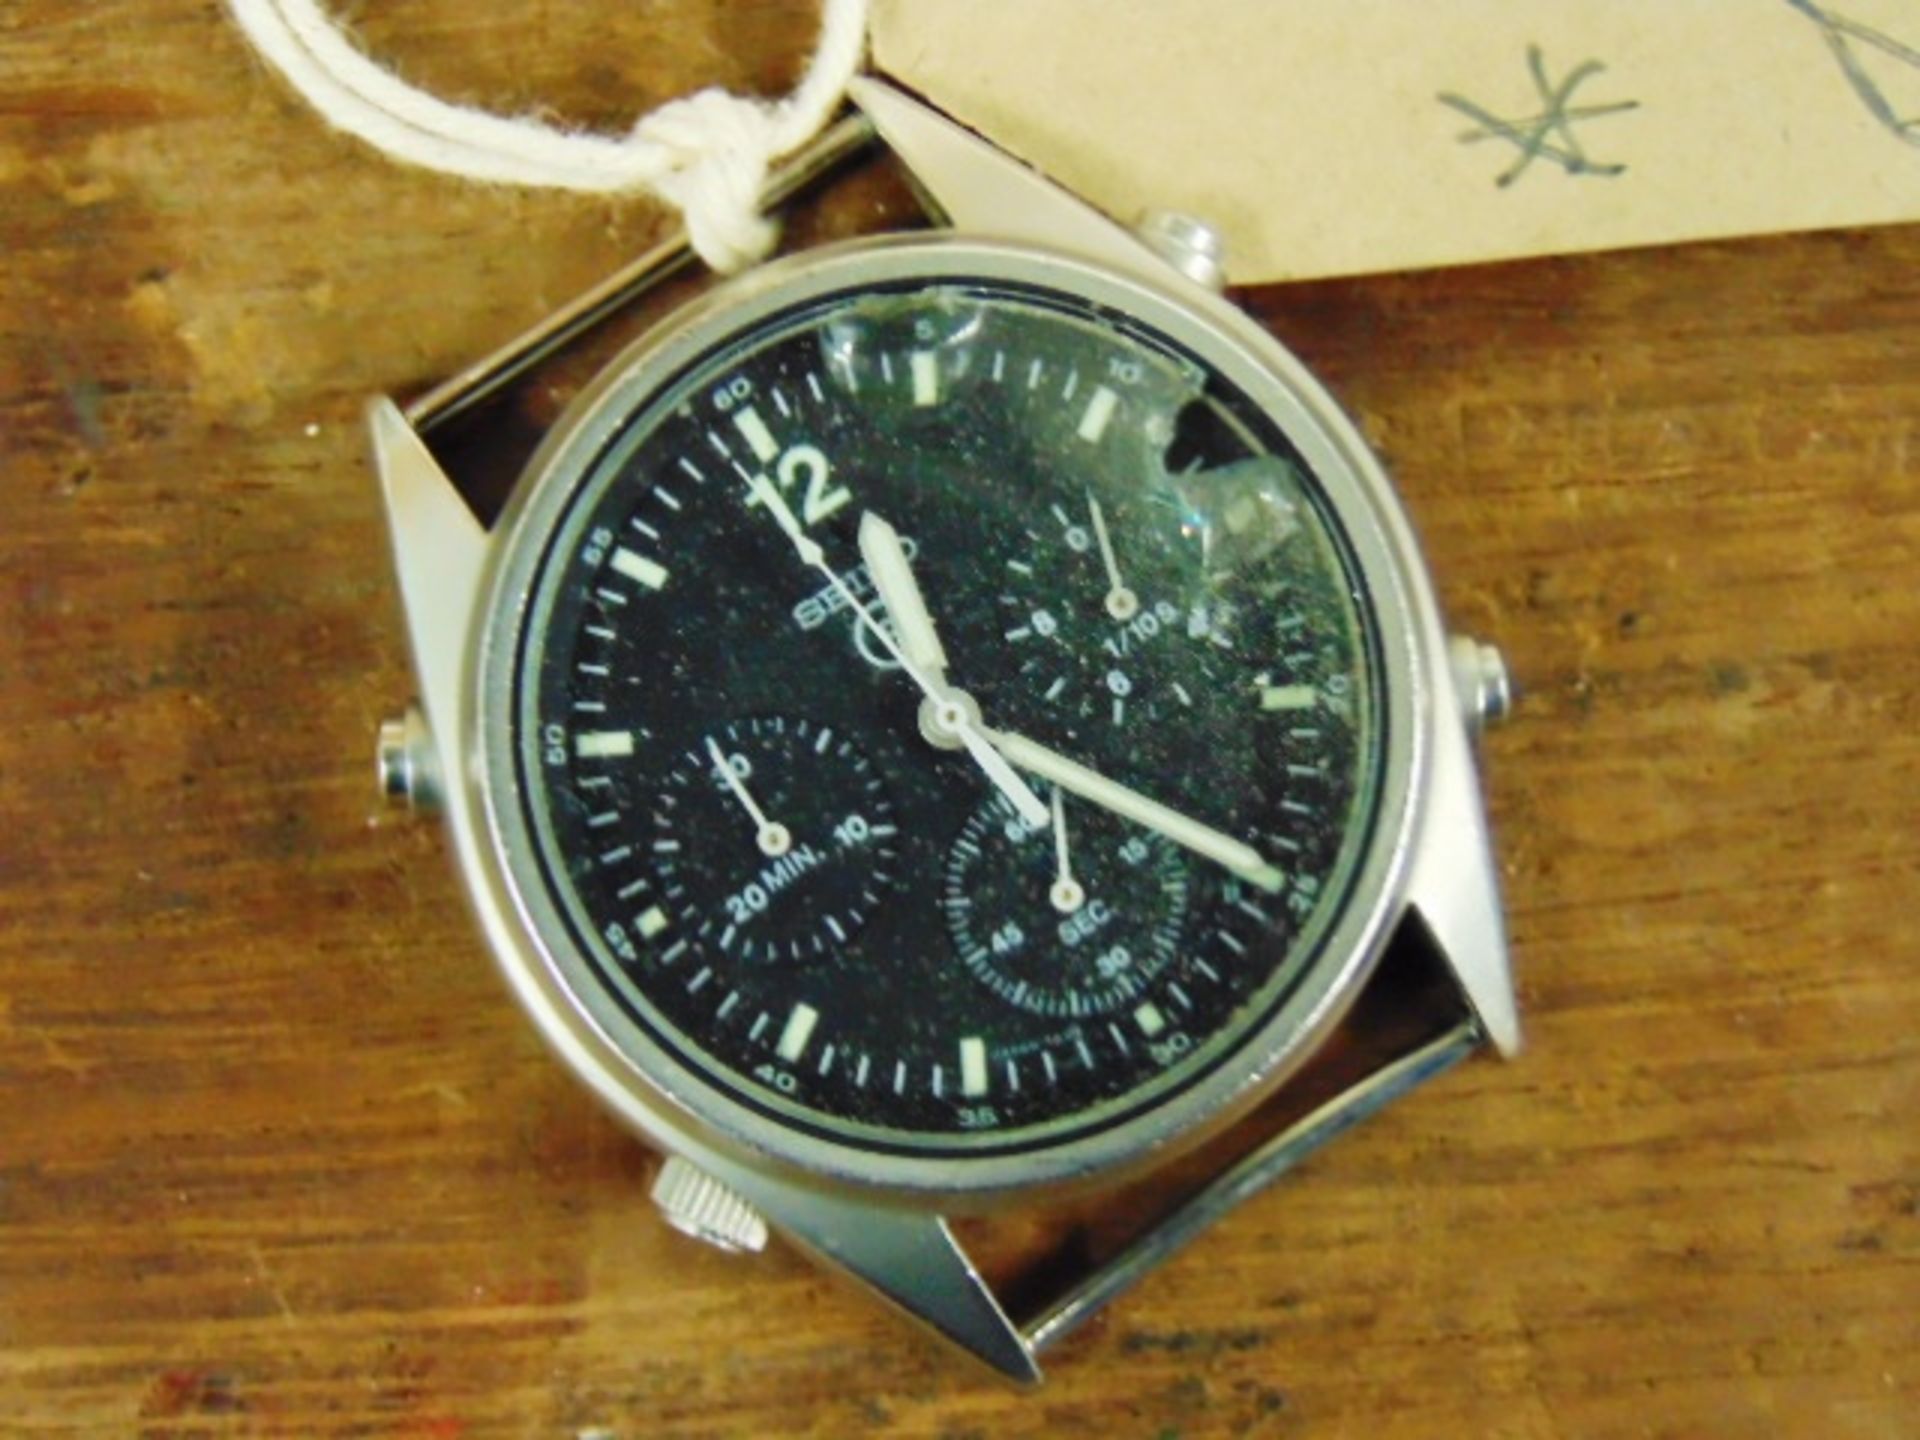 Seiko Pilots Chronograph generation 1 - Image 2 of 4